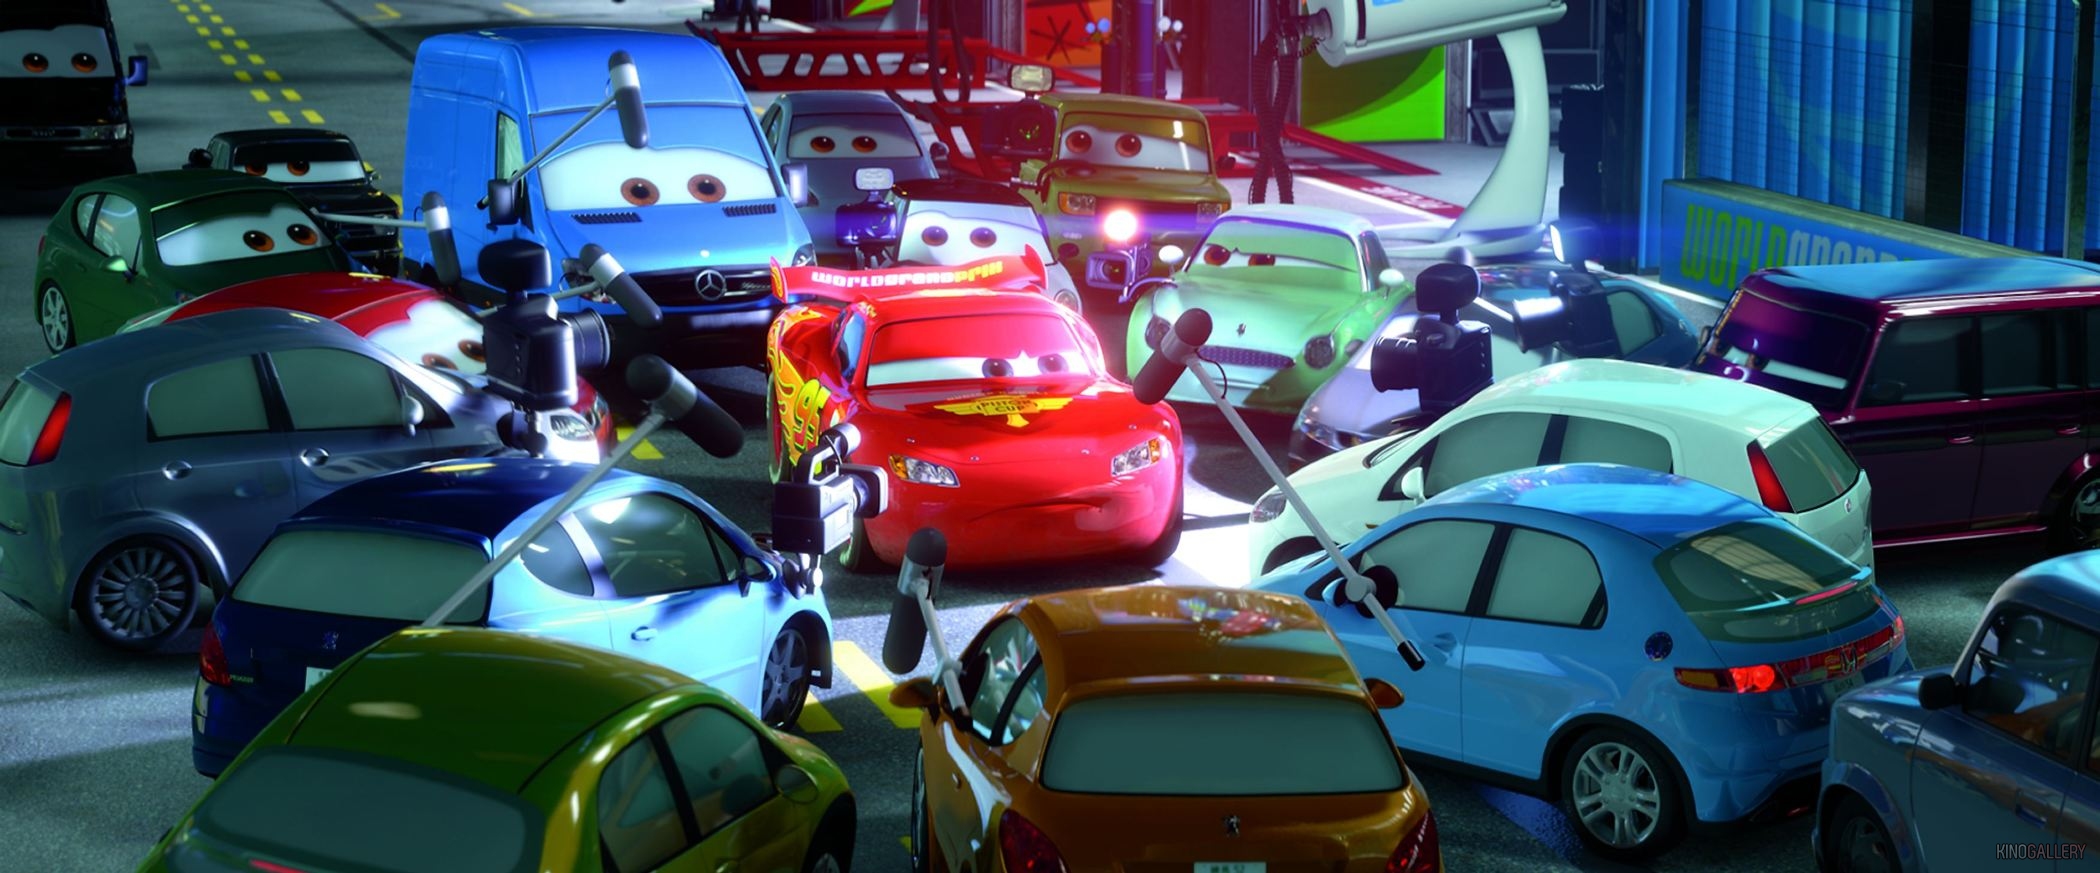 disney pixar cars animation film